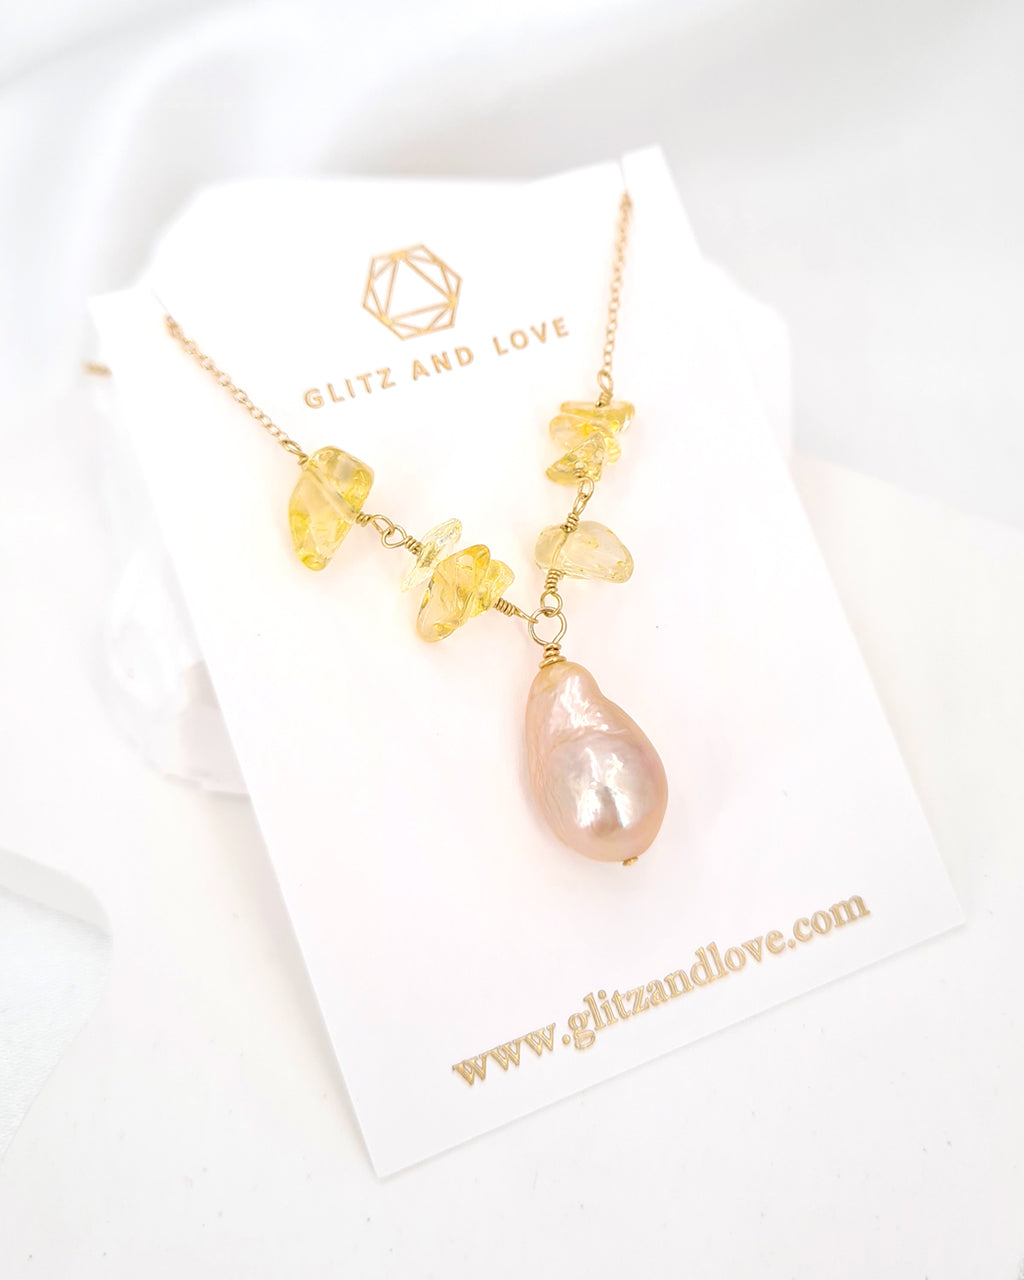 Teardrop Pearl Necklace with Citrine Gemstone Earrings Handmade in Singapore